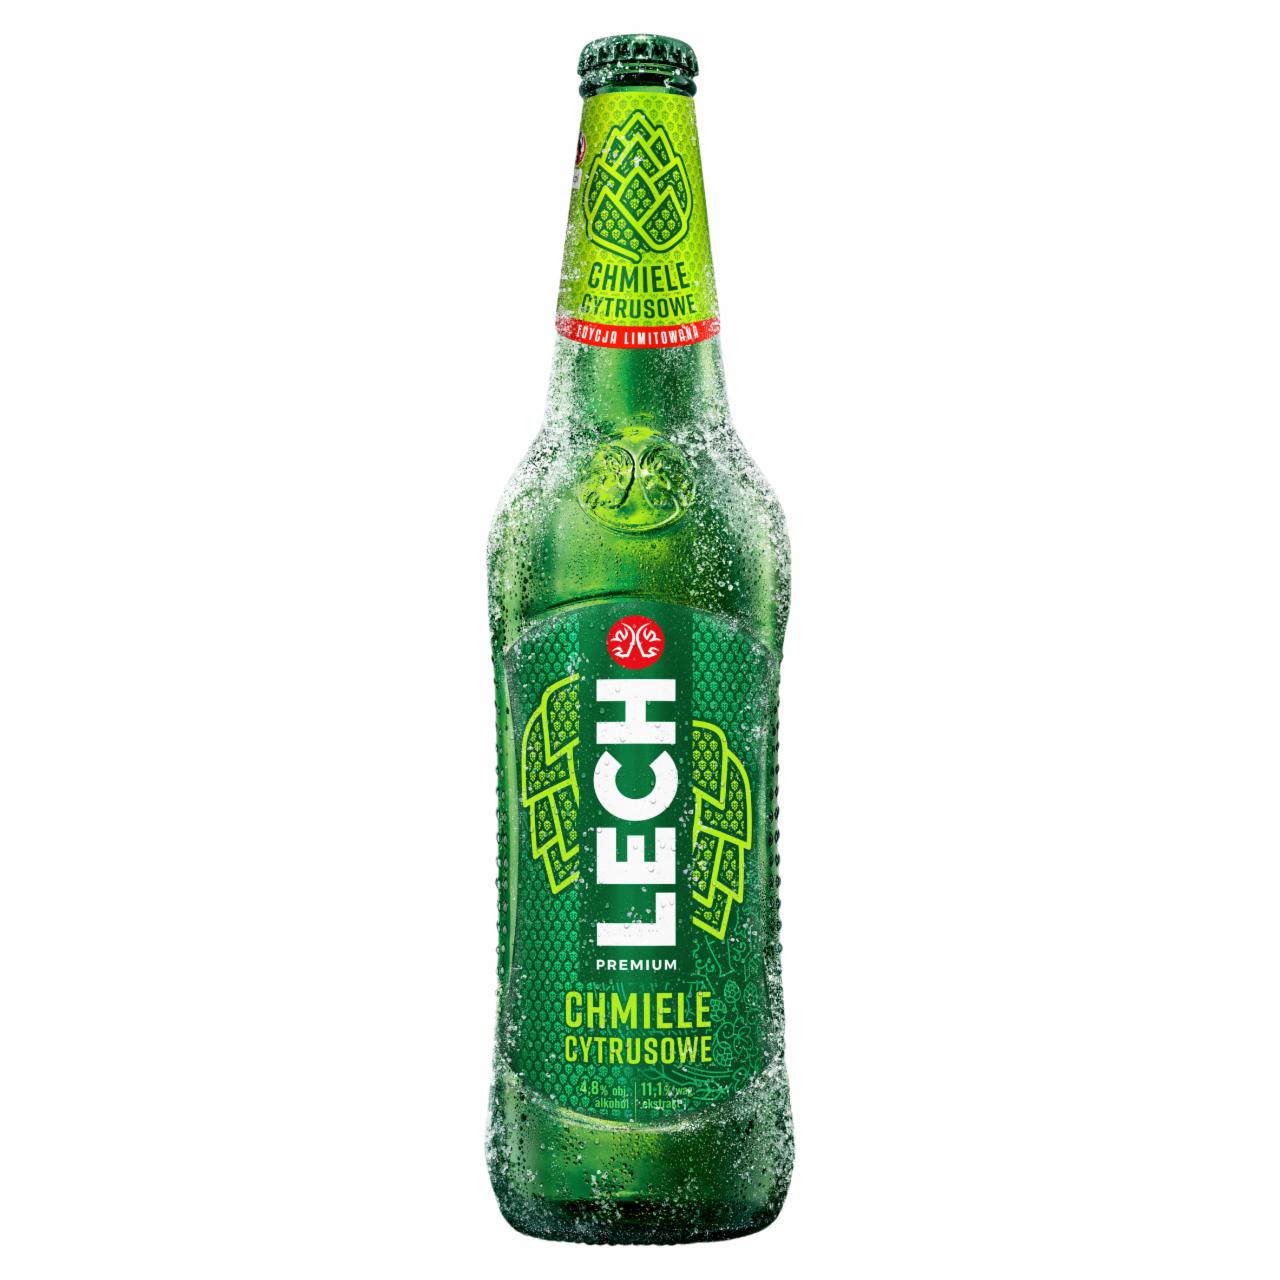 Zdjęcia - Lech Premium Piwo jasne chmiele cytrusowe 500 ml